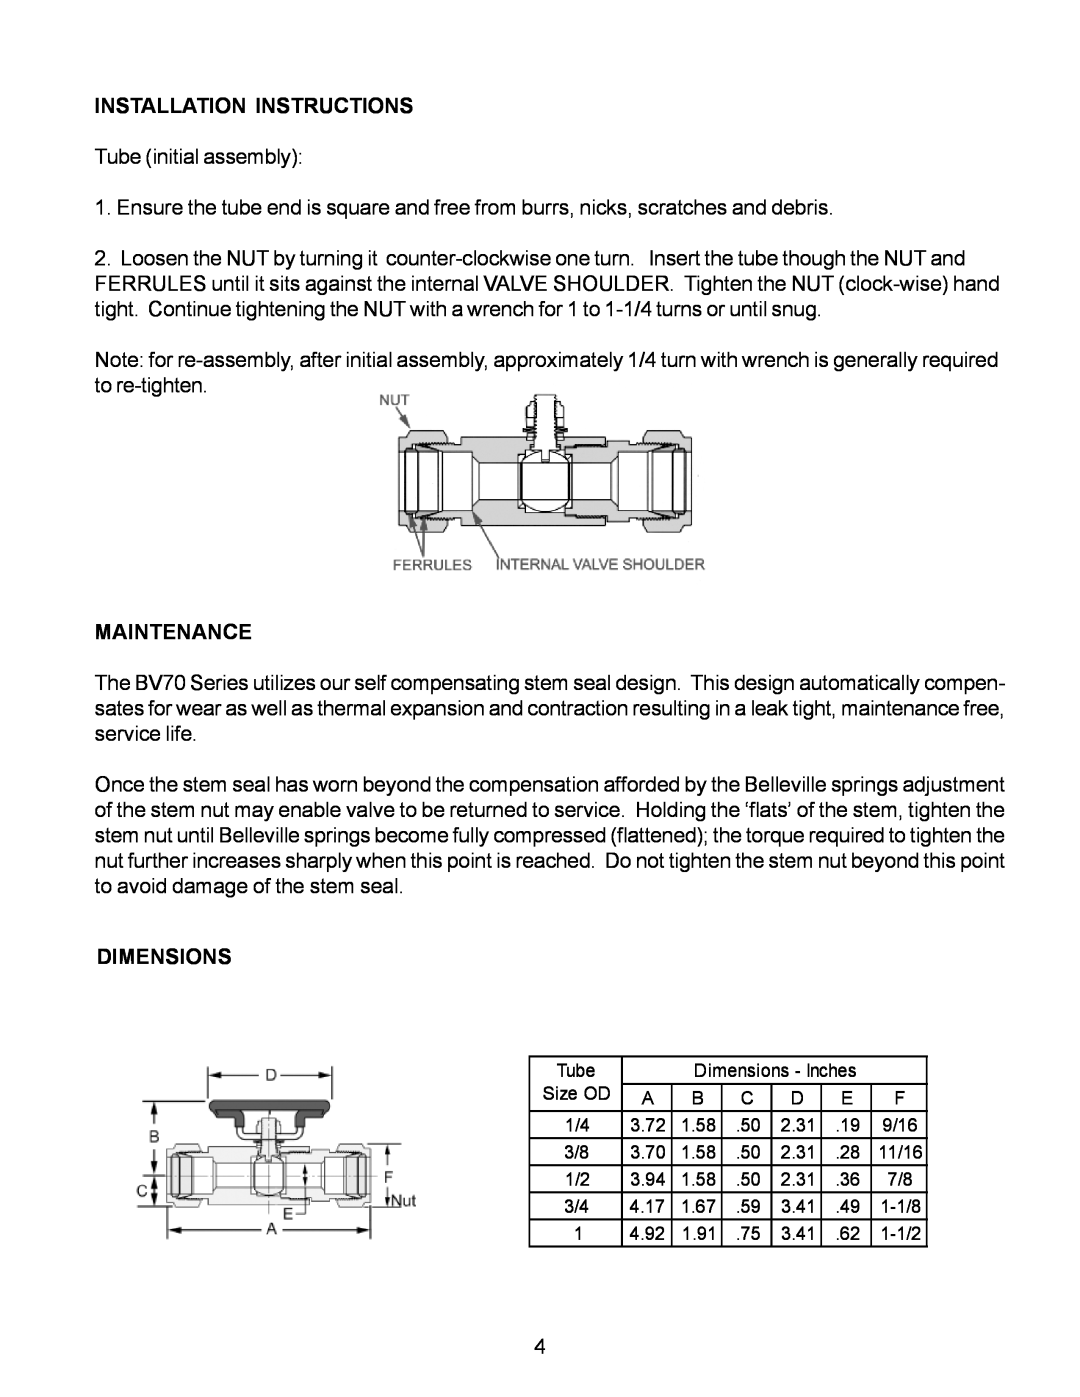 Omega Engineering BV70 manual Installation Instructions, Maintenance, Dimensions 